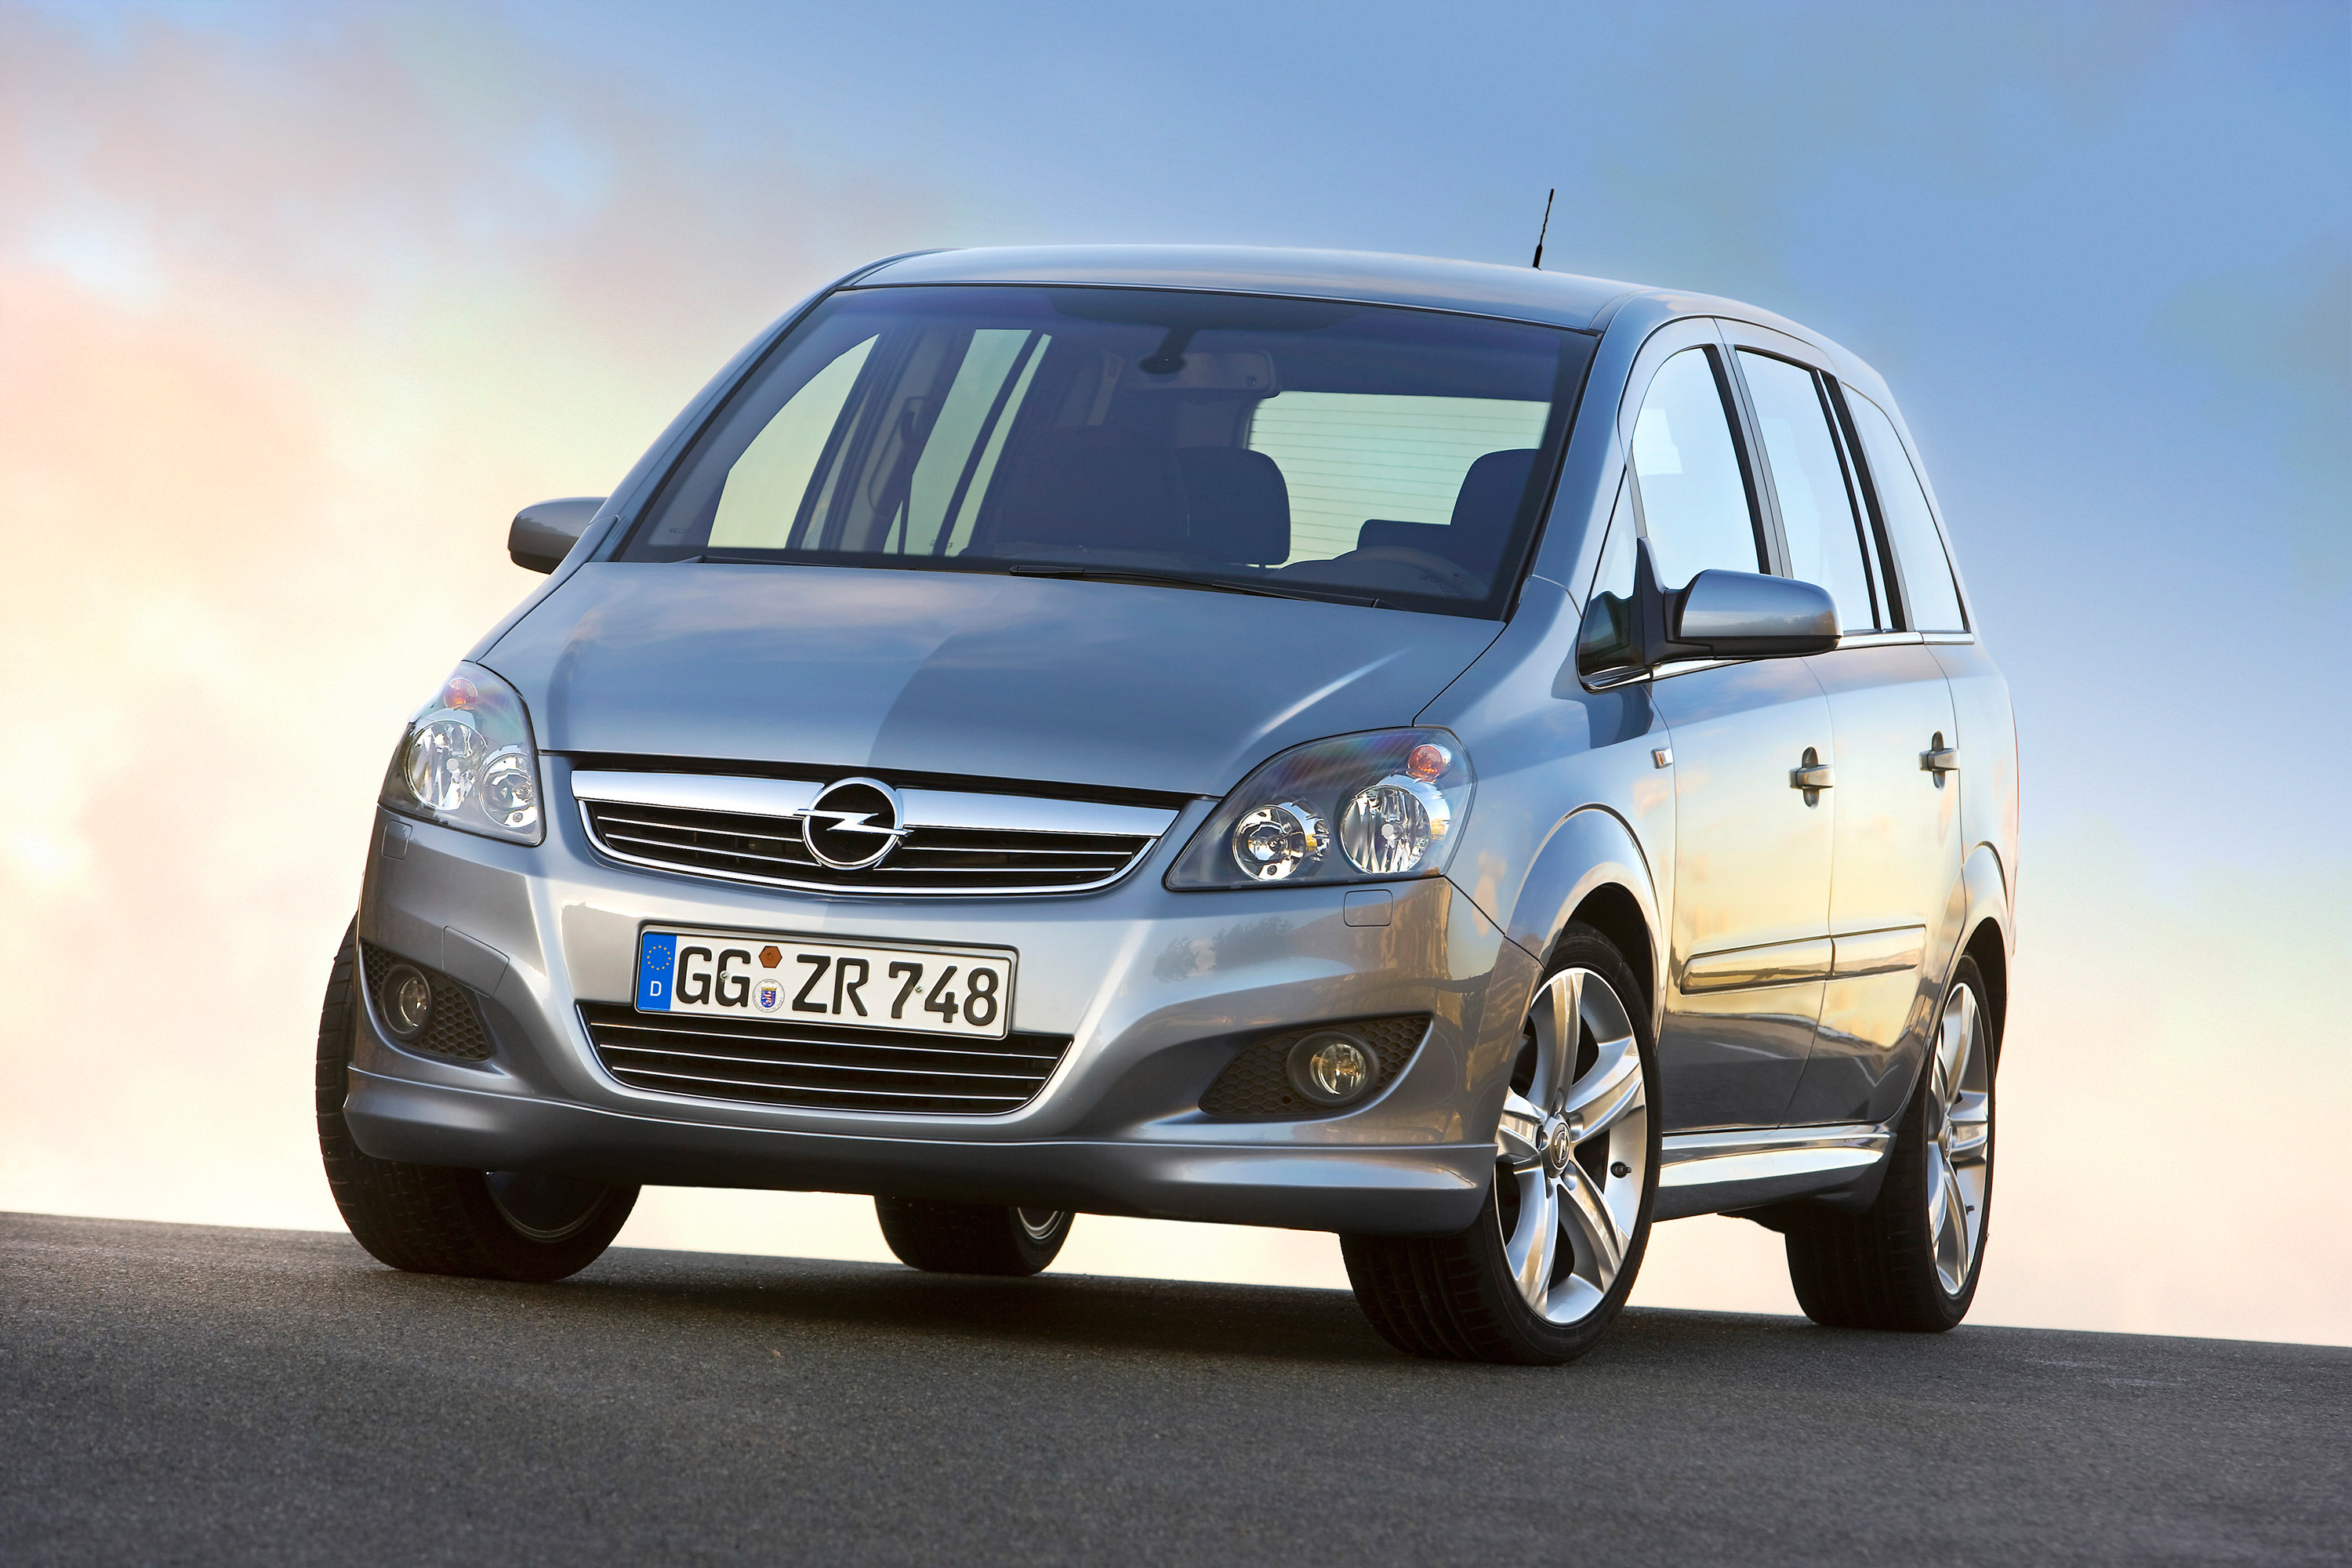 2008 Opel Zafira - HD Picture 11 of 12 - #10028 3000x2000